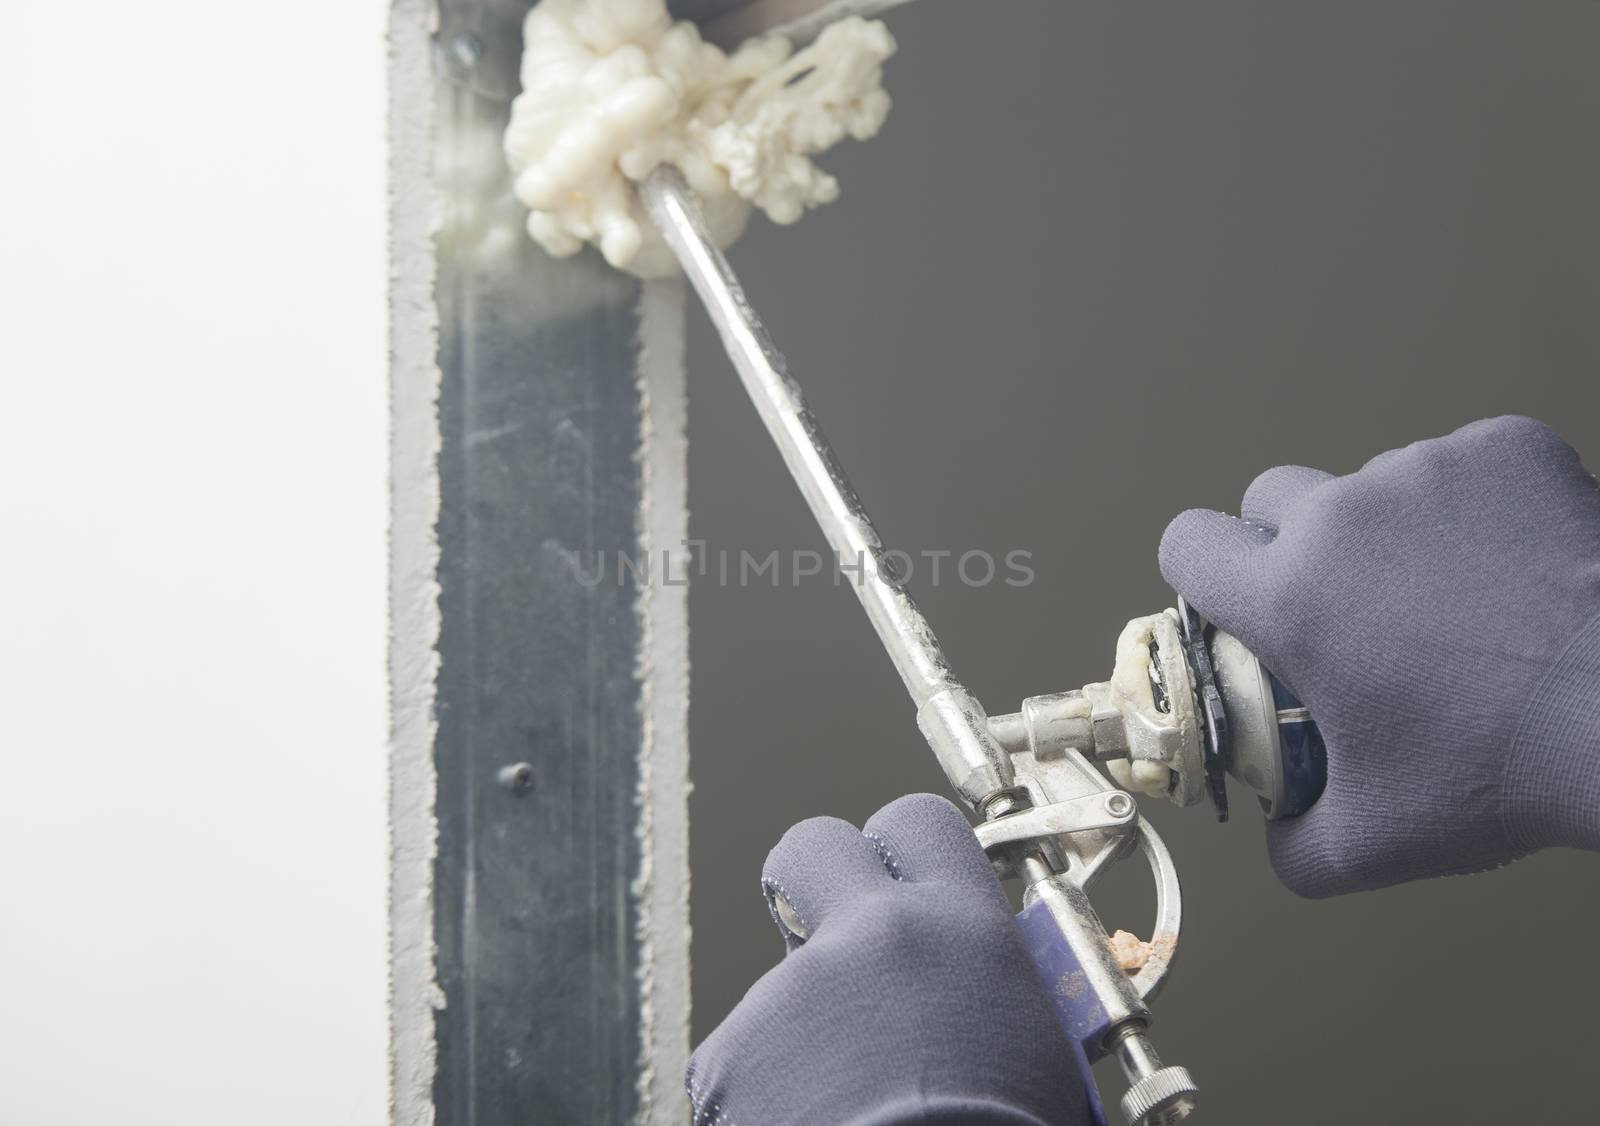 Doorway fixing with extending foam by snep_photo